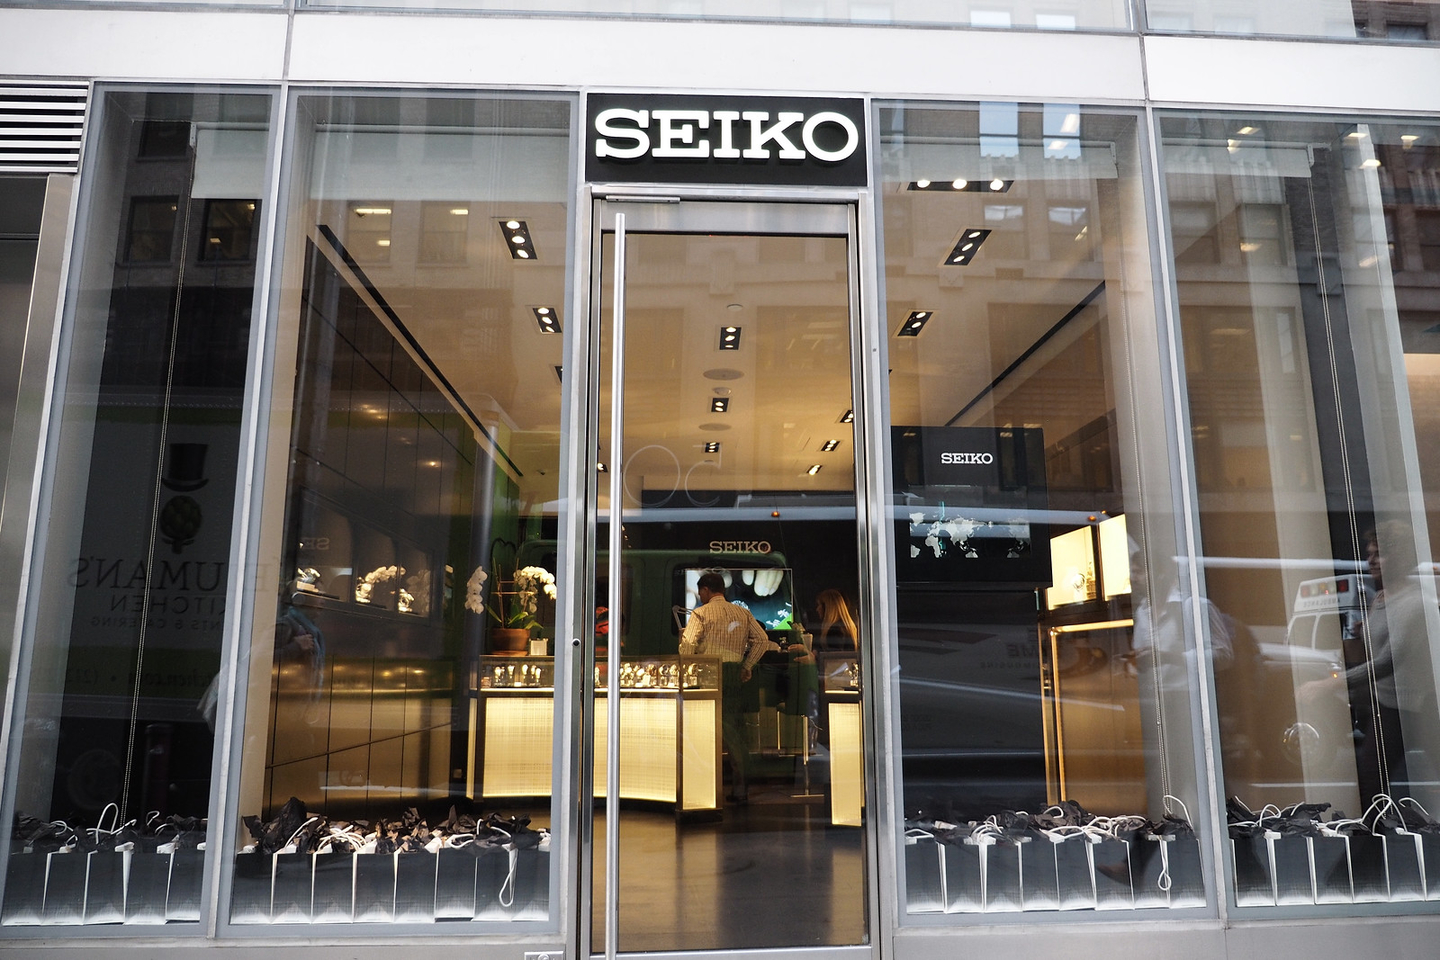 PHOTO REPORT: Seiko’s new high-end Madison Avenue boutique